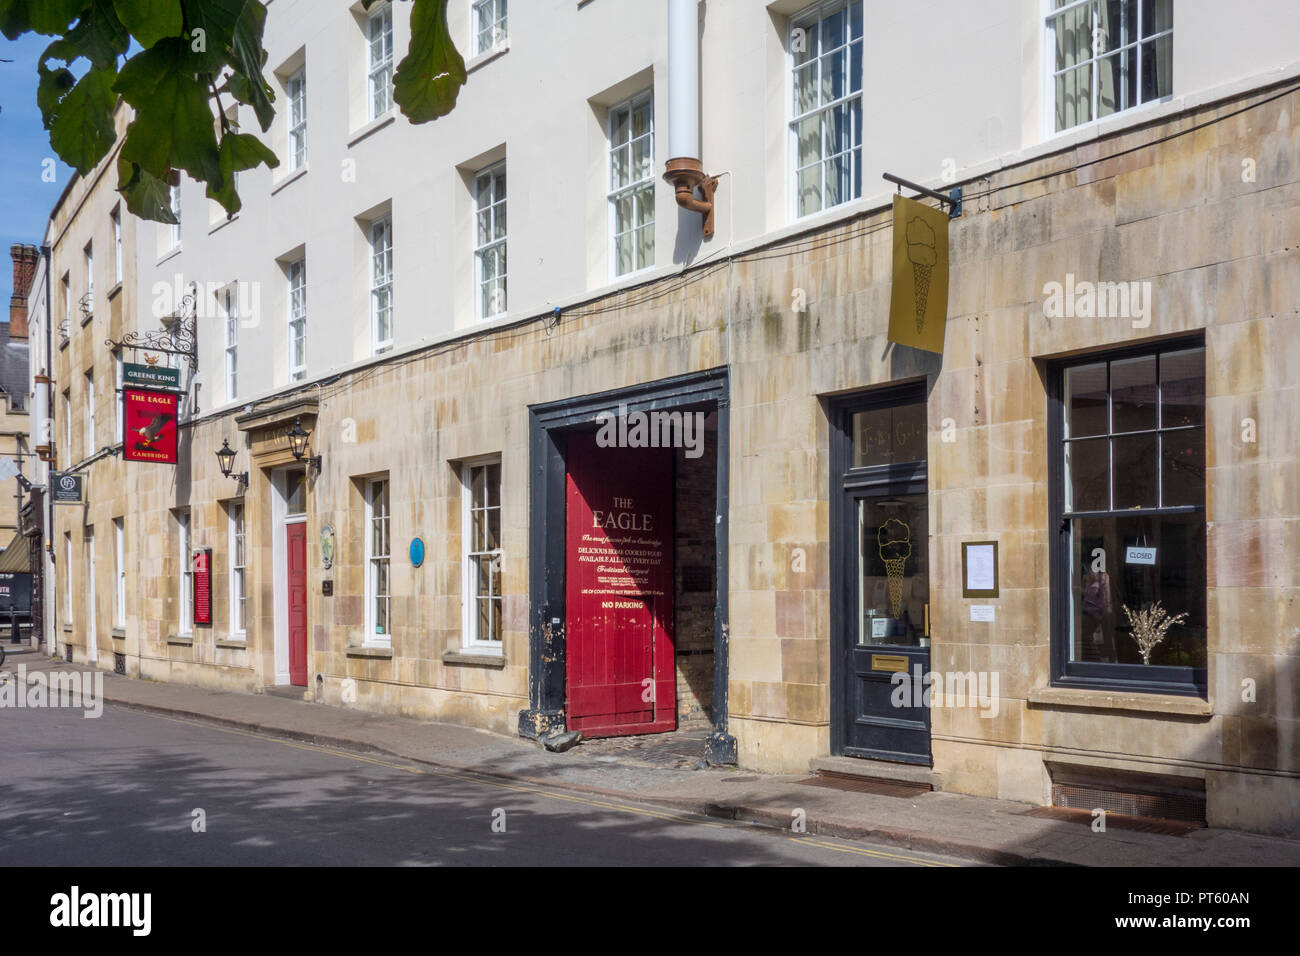 The Eagle, historic pub on Bene't Street, Cambridge, UK. Greene King brewery Stock Photo